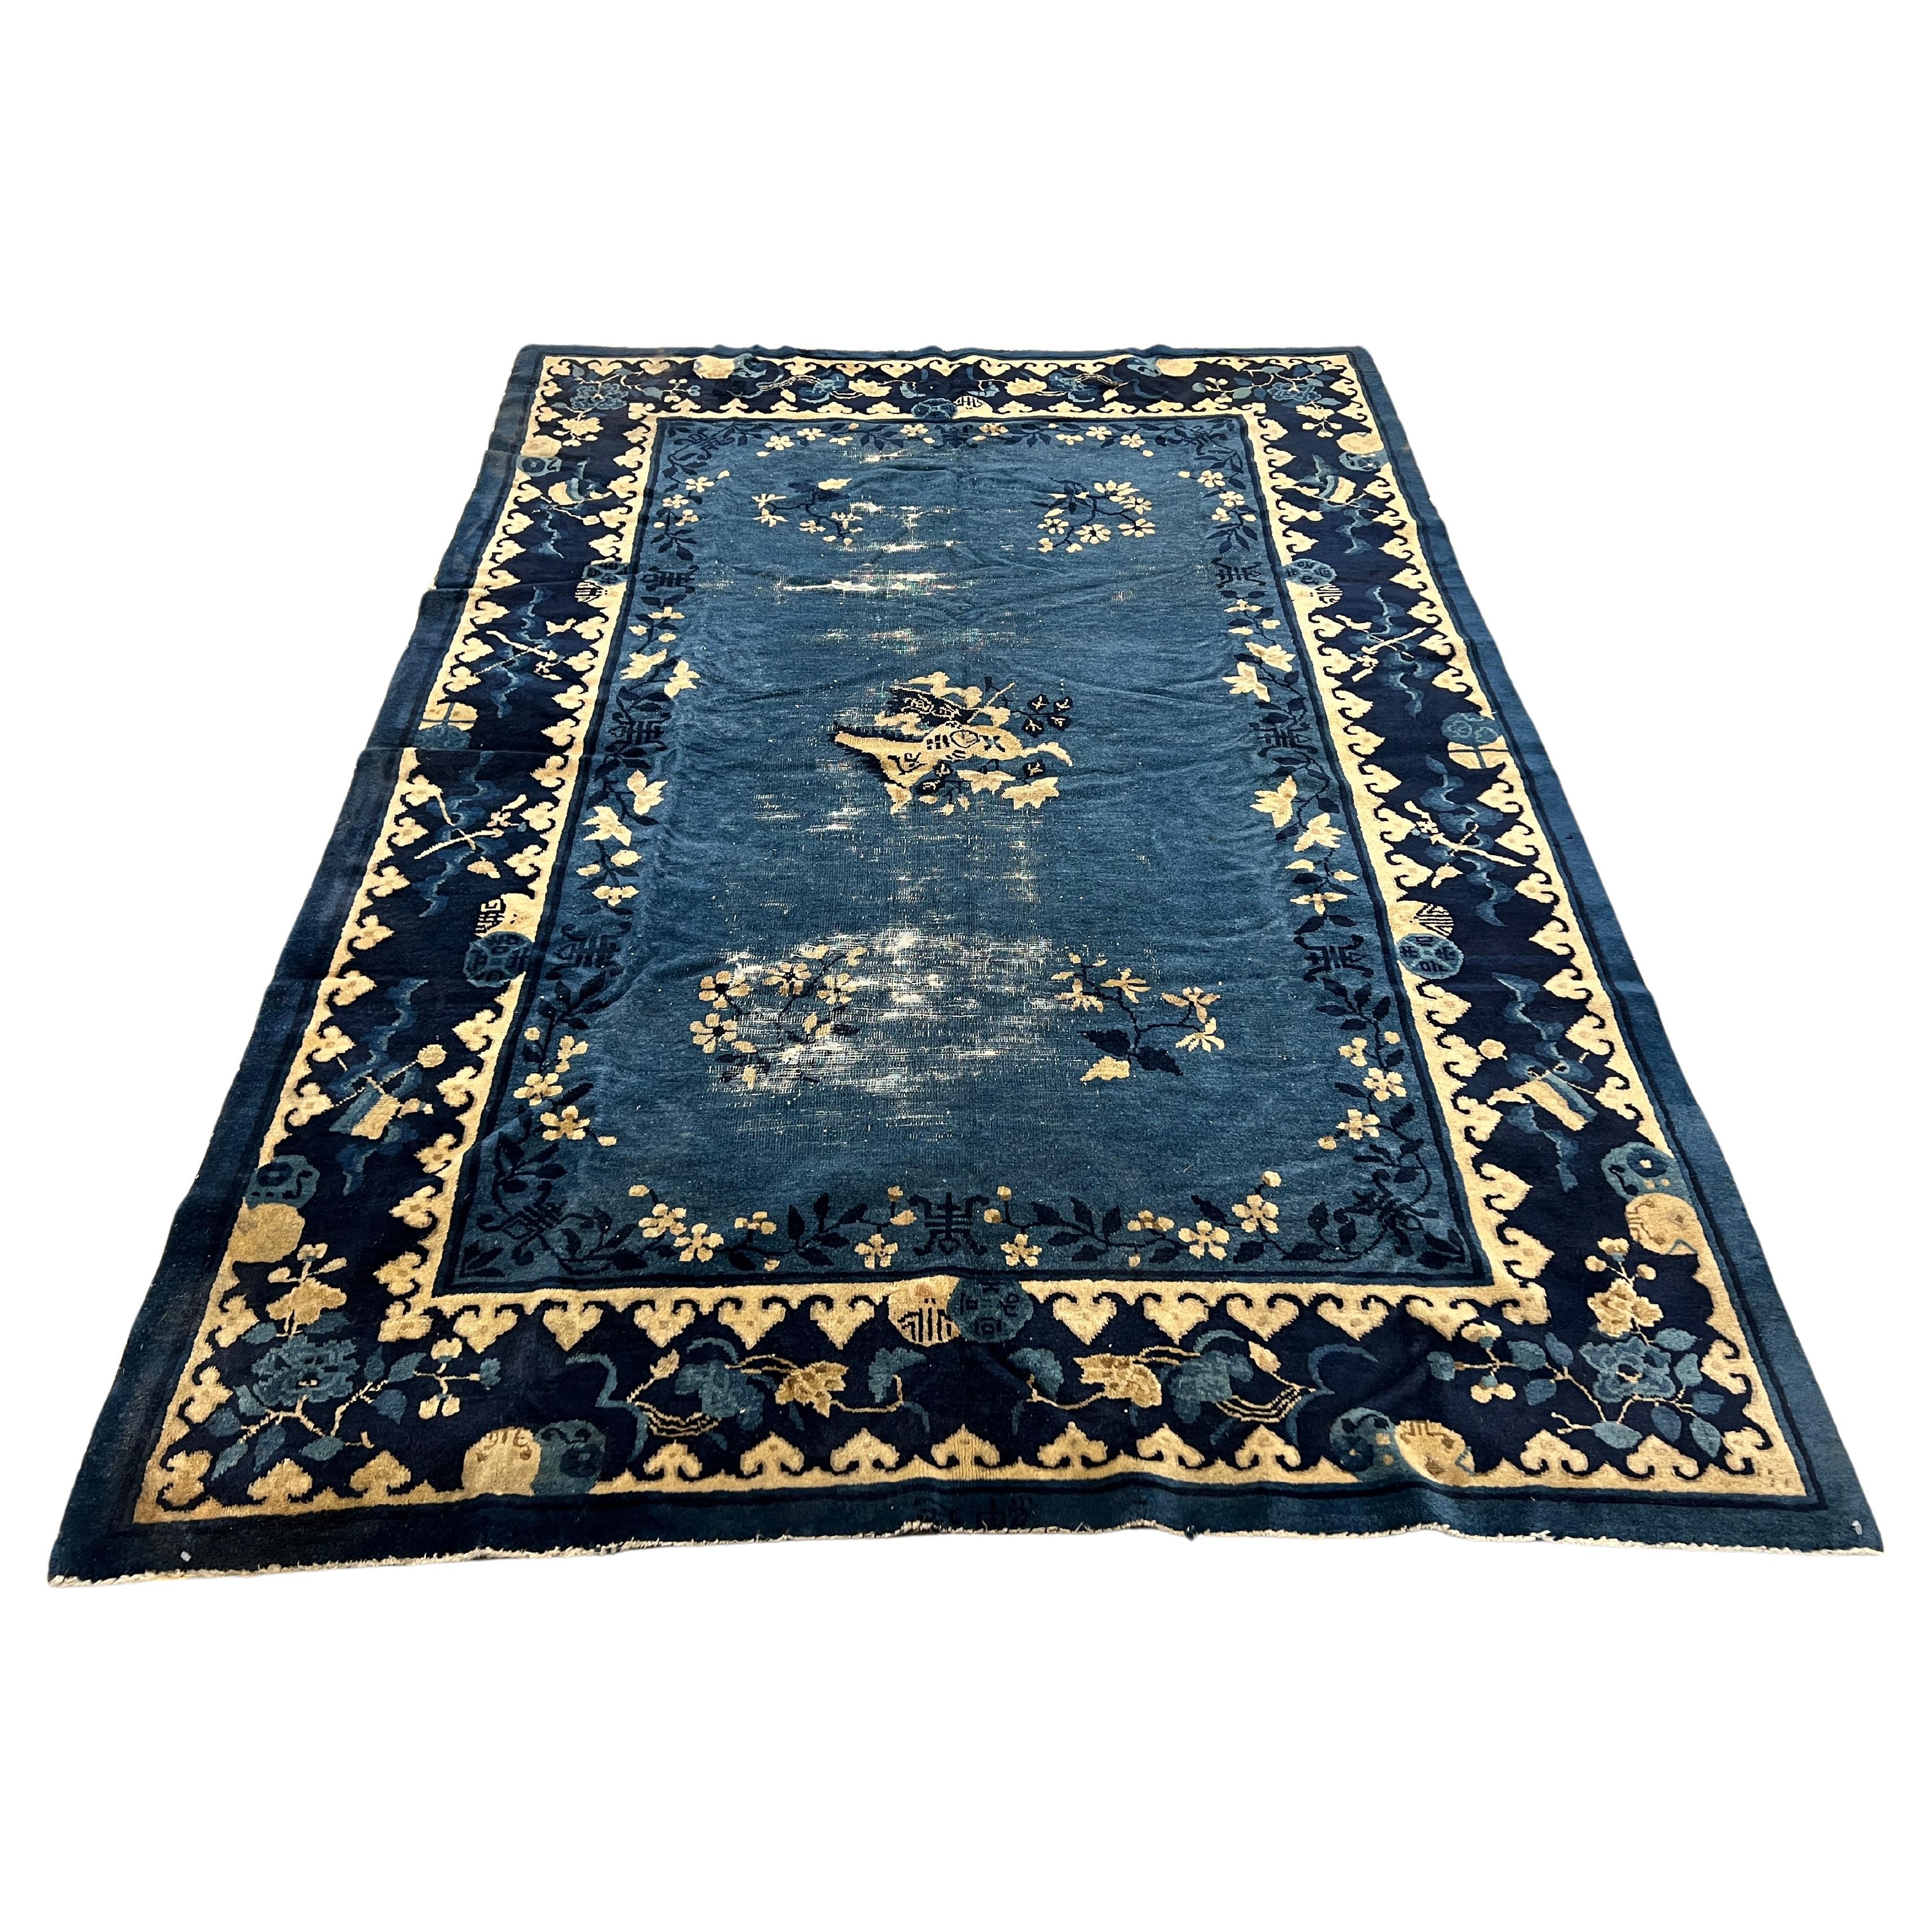 Antique Chinese Peking Blue Rug or Carpet - Signed 5'10" x 8'4"